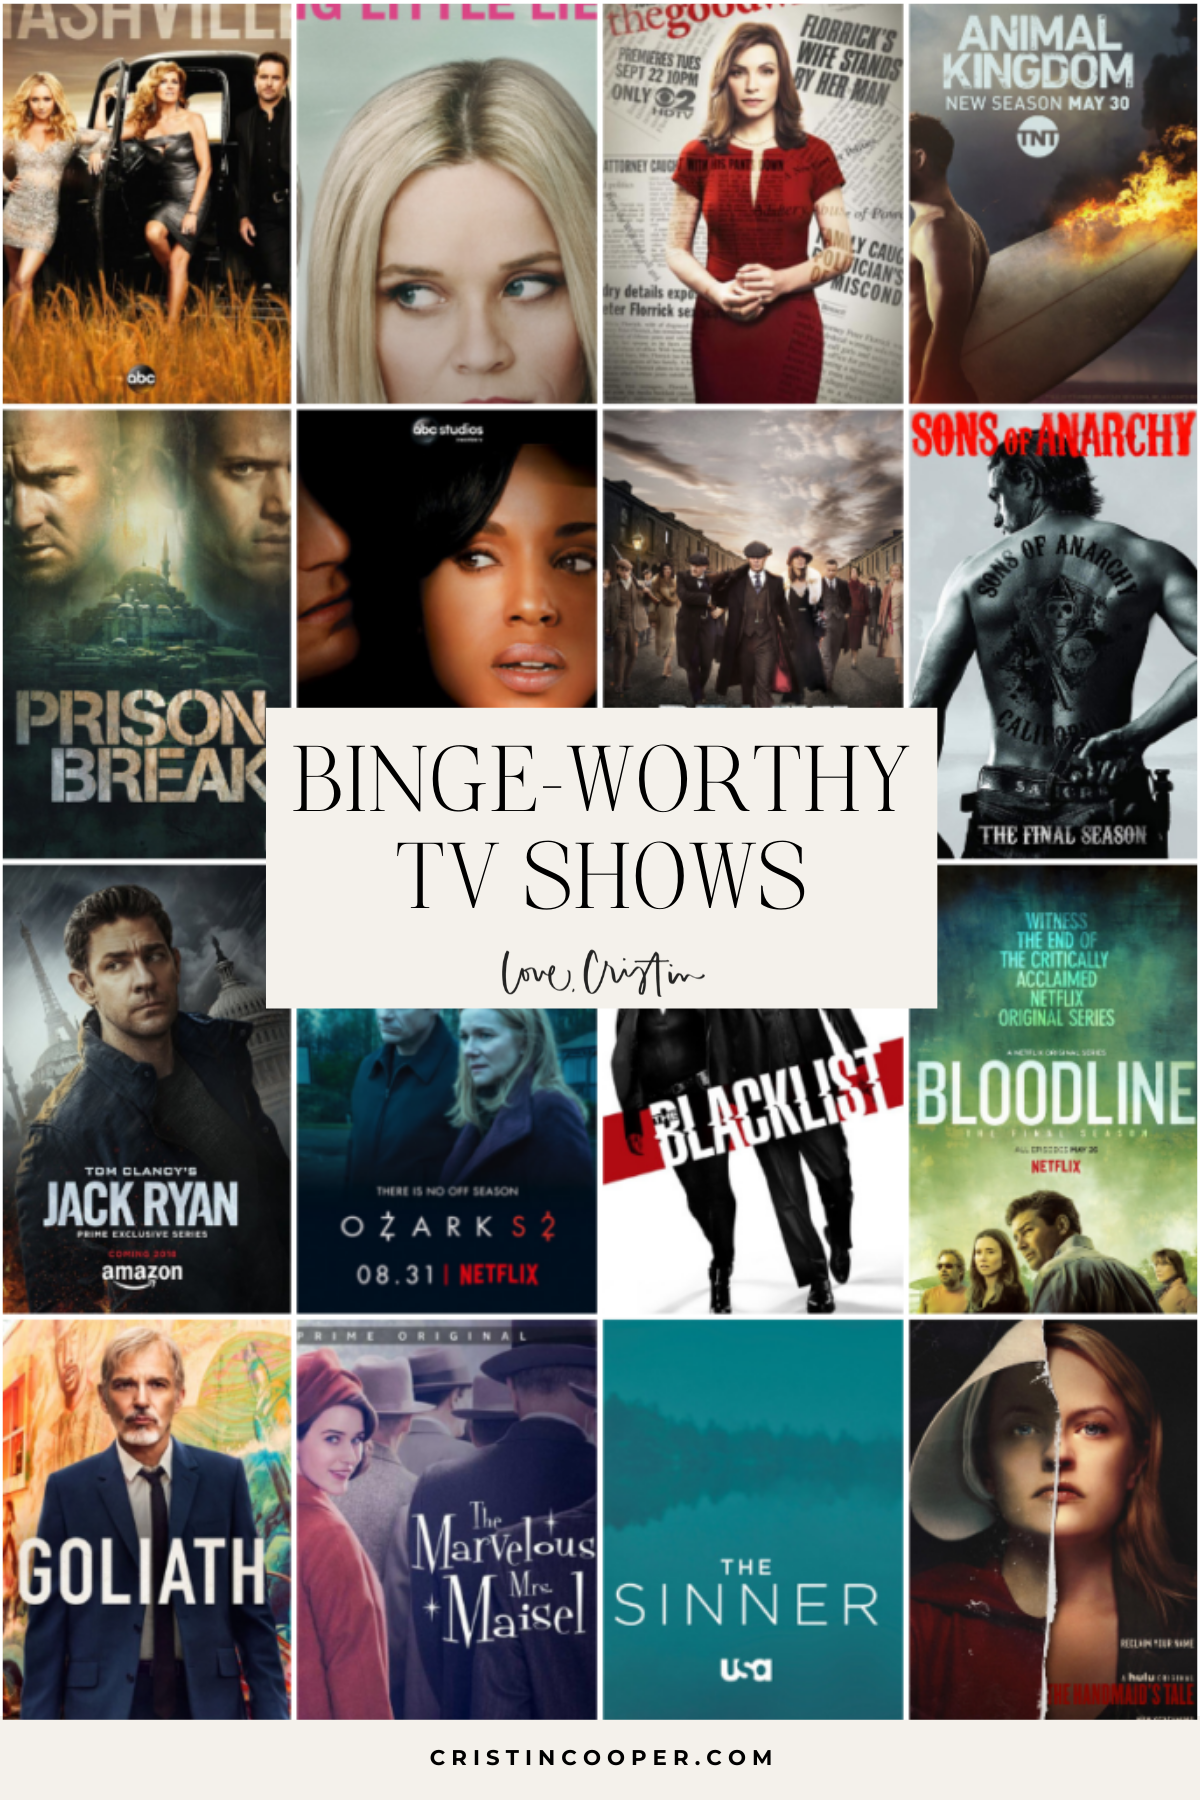 Bingeworthy TV shows